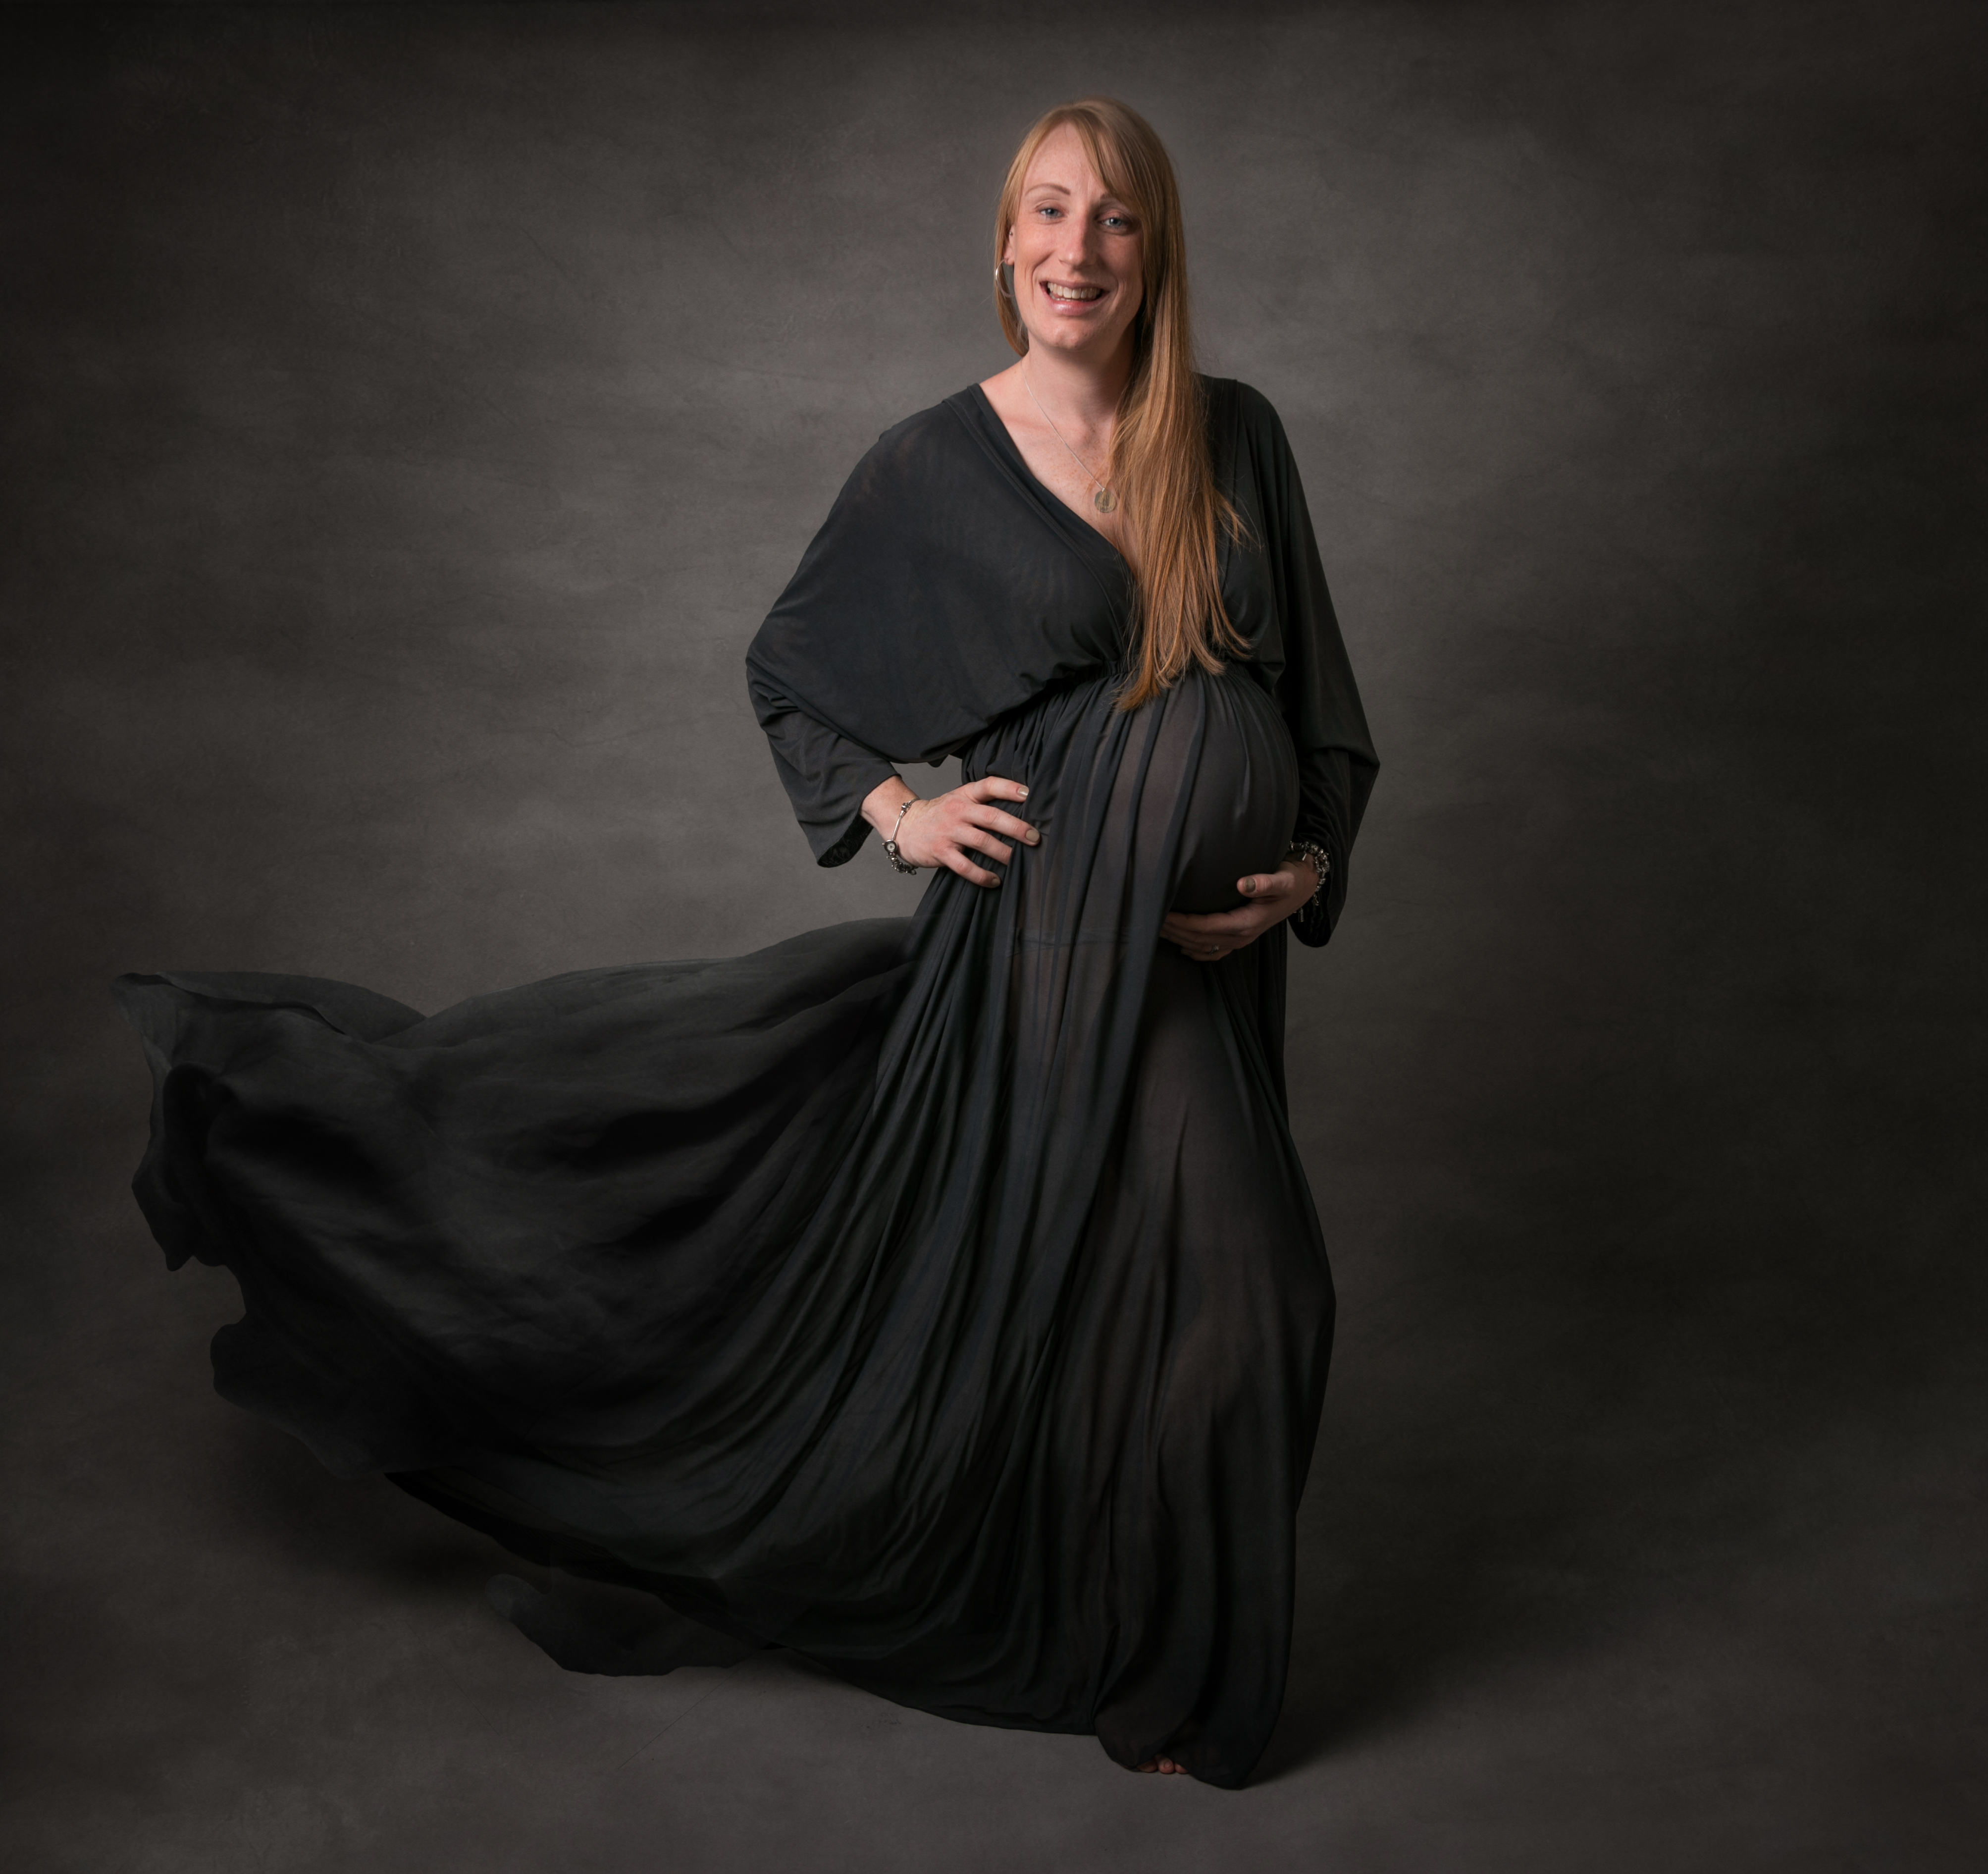 Pregnany lady in grey dress